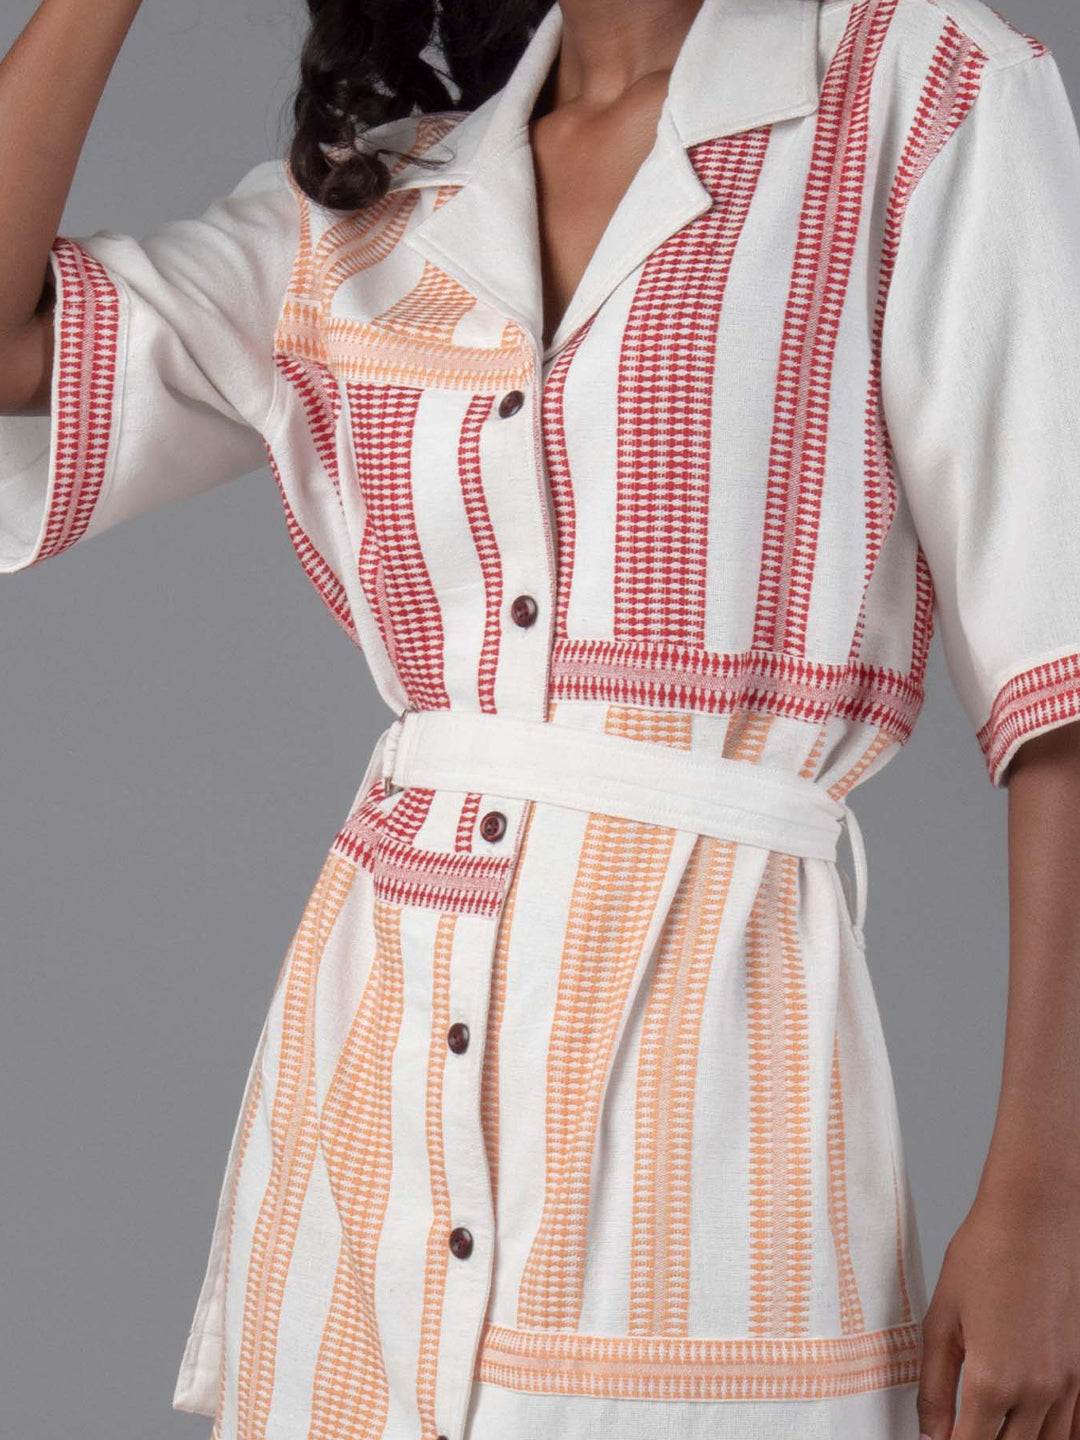 Japanese Plus Size Women Summer Sweet Doll Collar Loose Long Sleeve Dress  kawaii | eBay